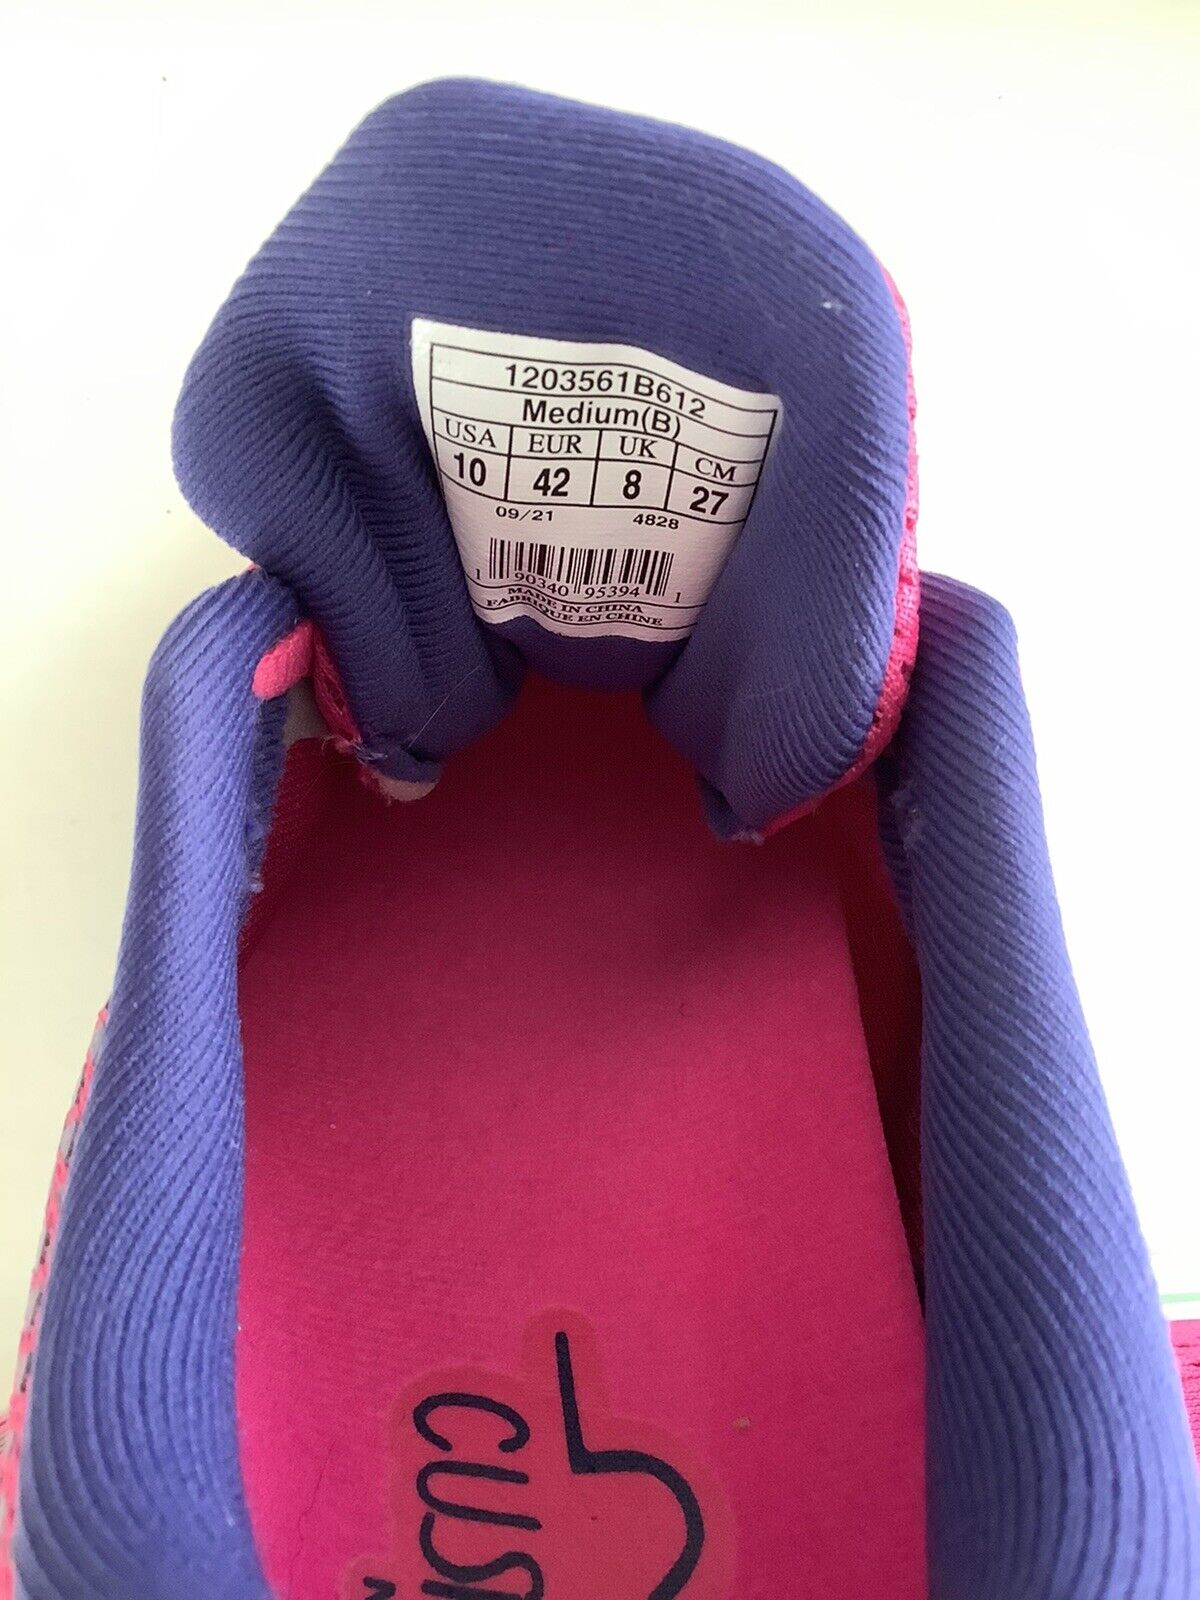 NEW Brooks Ghost 14 Women's Running Shoes - Pink/Purple - Sz 10 | eBay